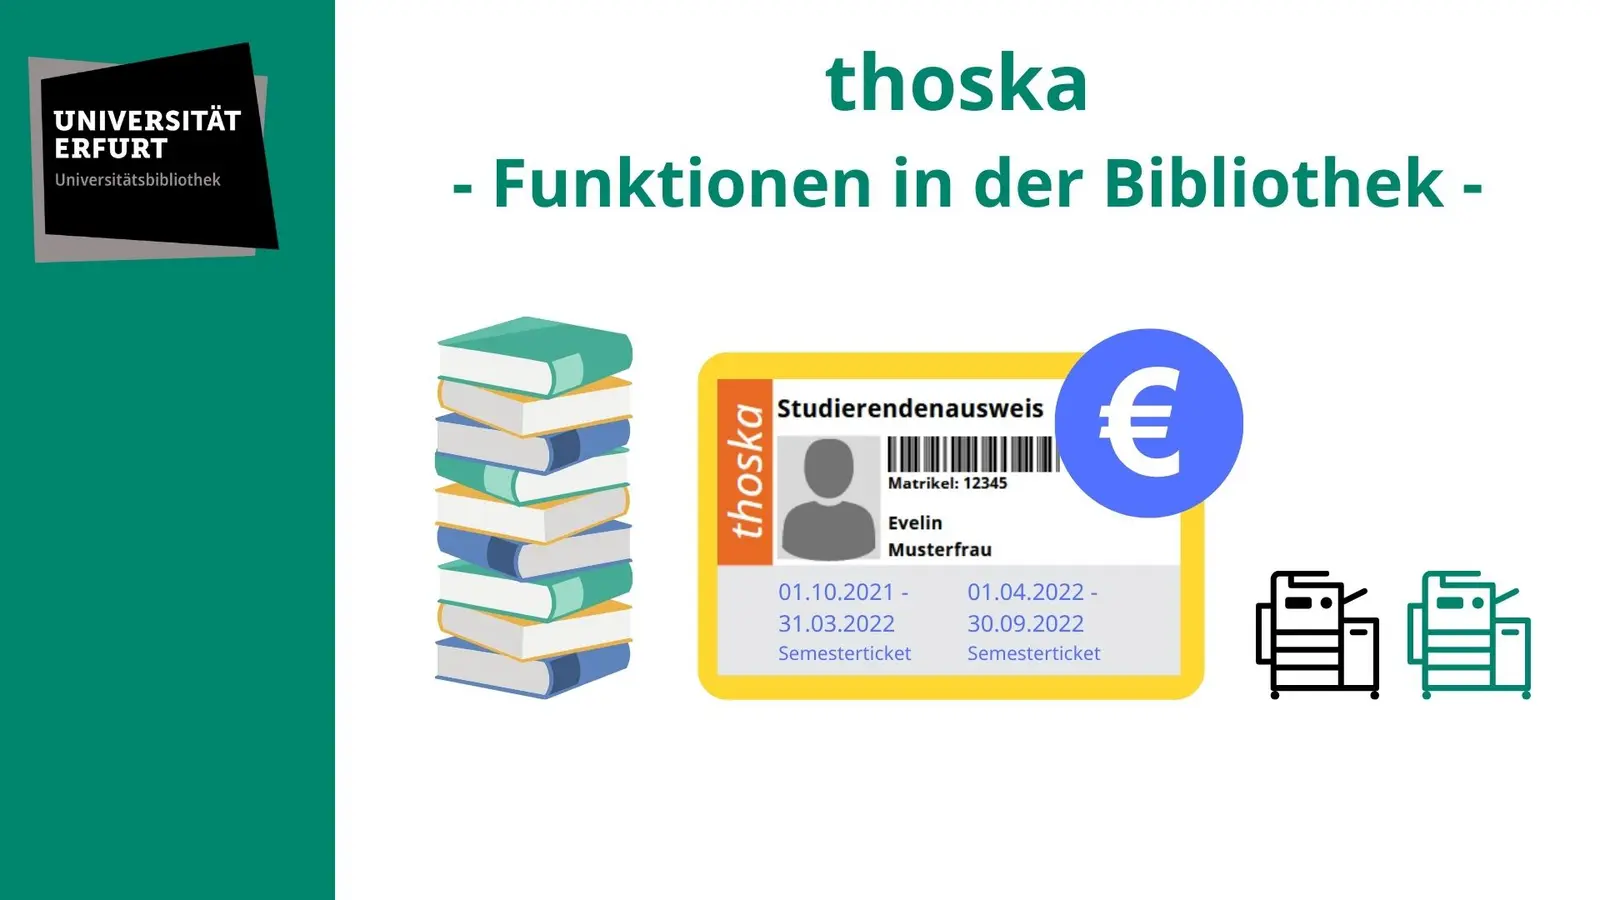 thoska in der Bibliothek